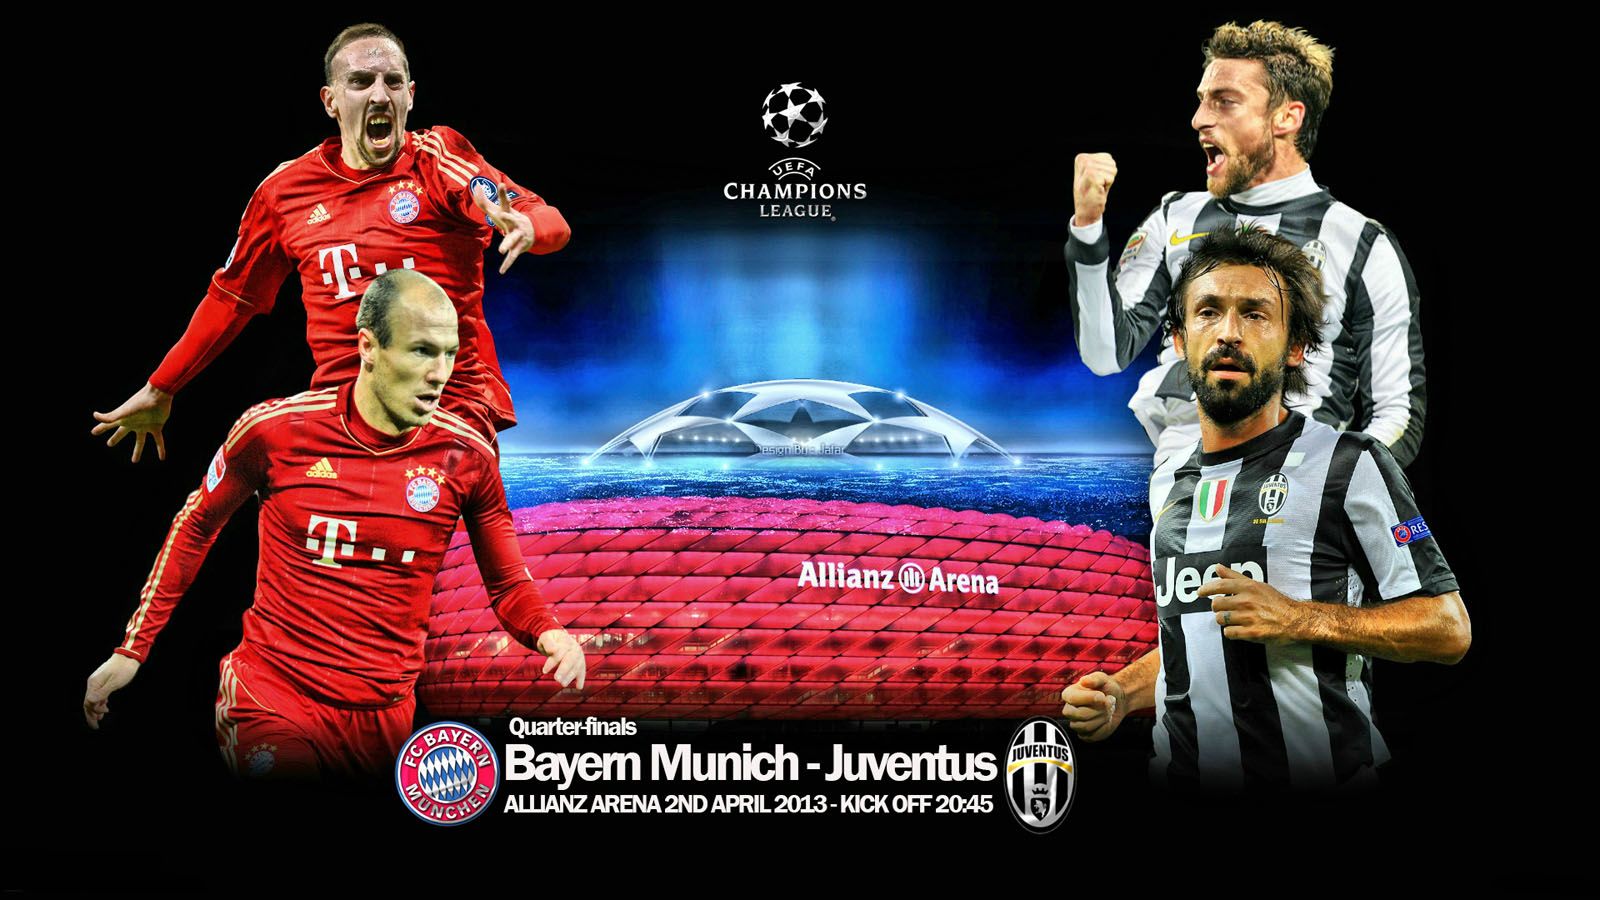 HD wallpaper, Vs, Juventus, Bayern, Munchen